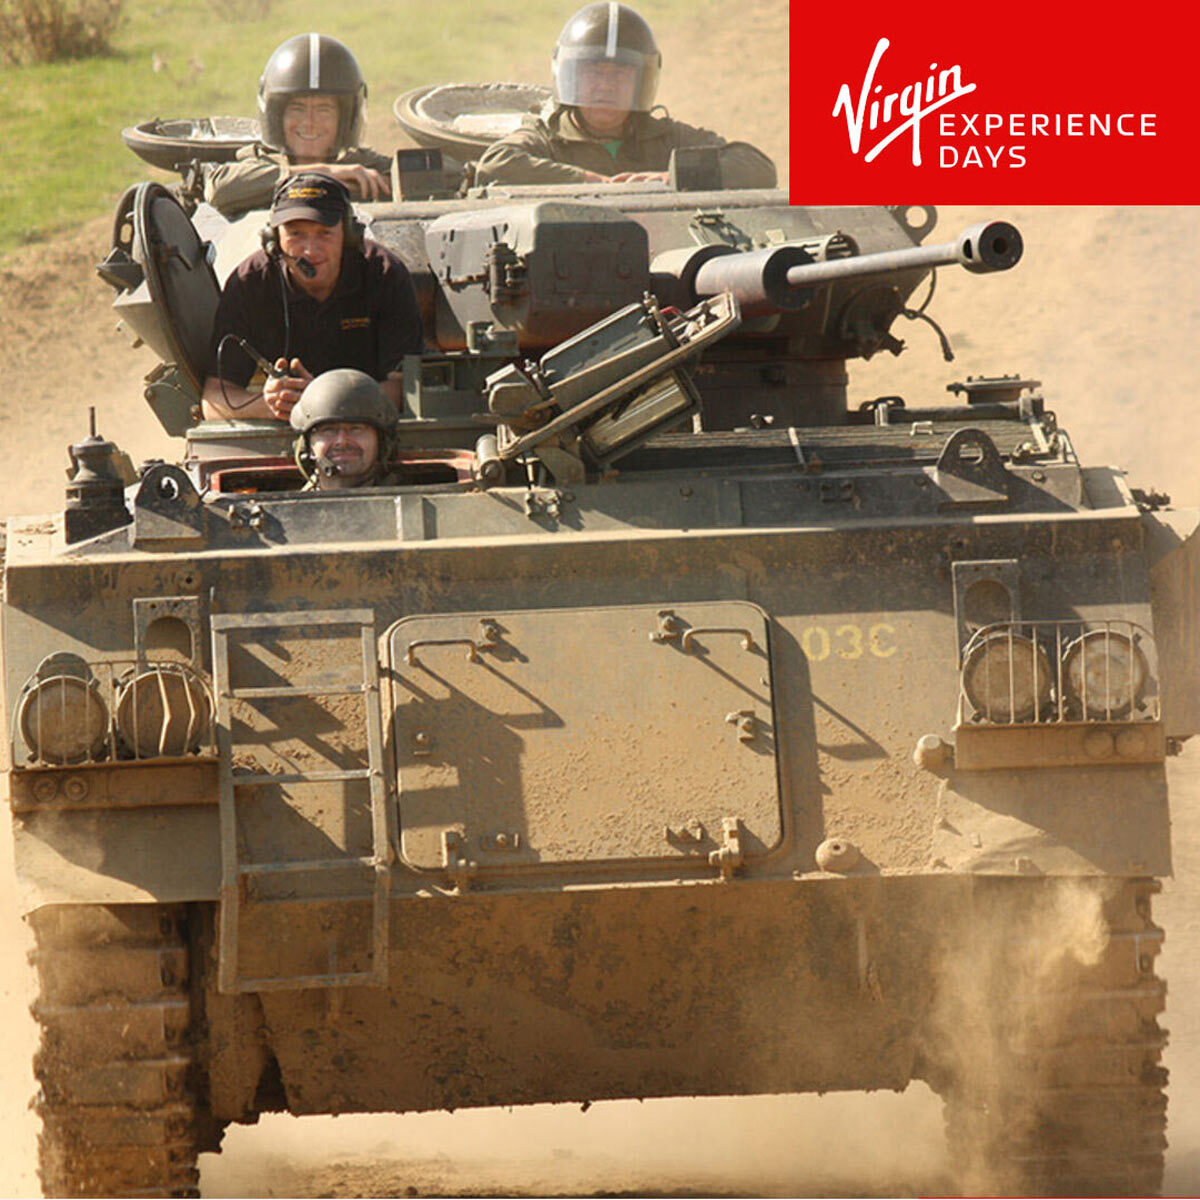 Buy Virgin Experience Tank Driving Taster Image1 at Costco.co.uk